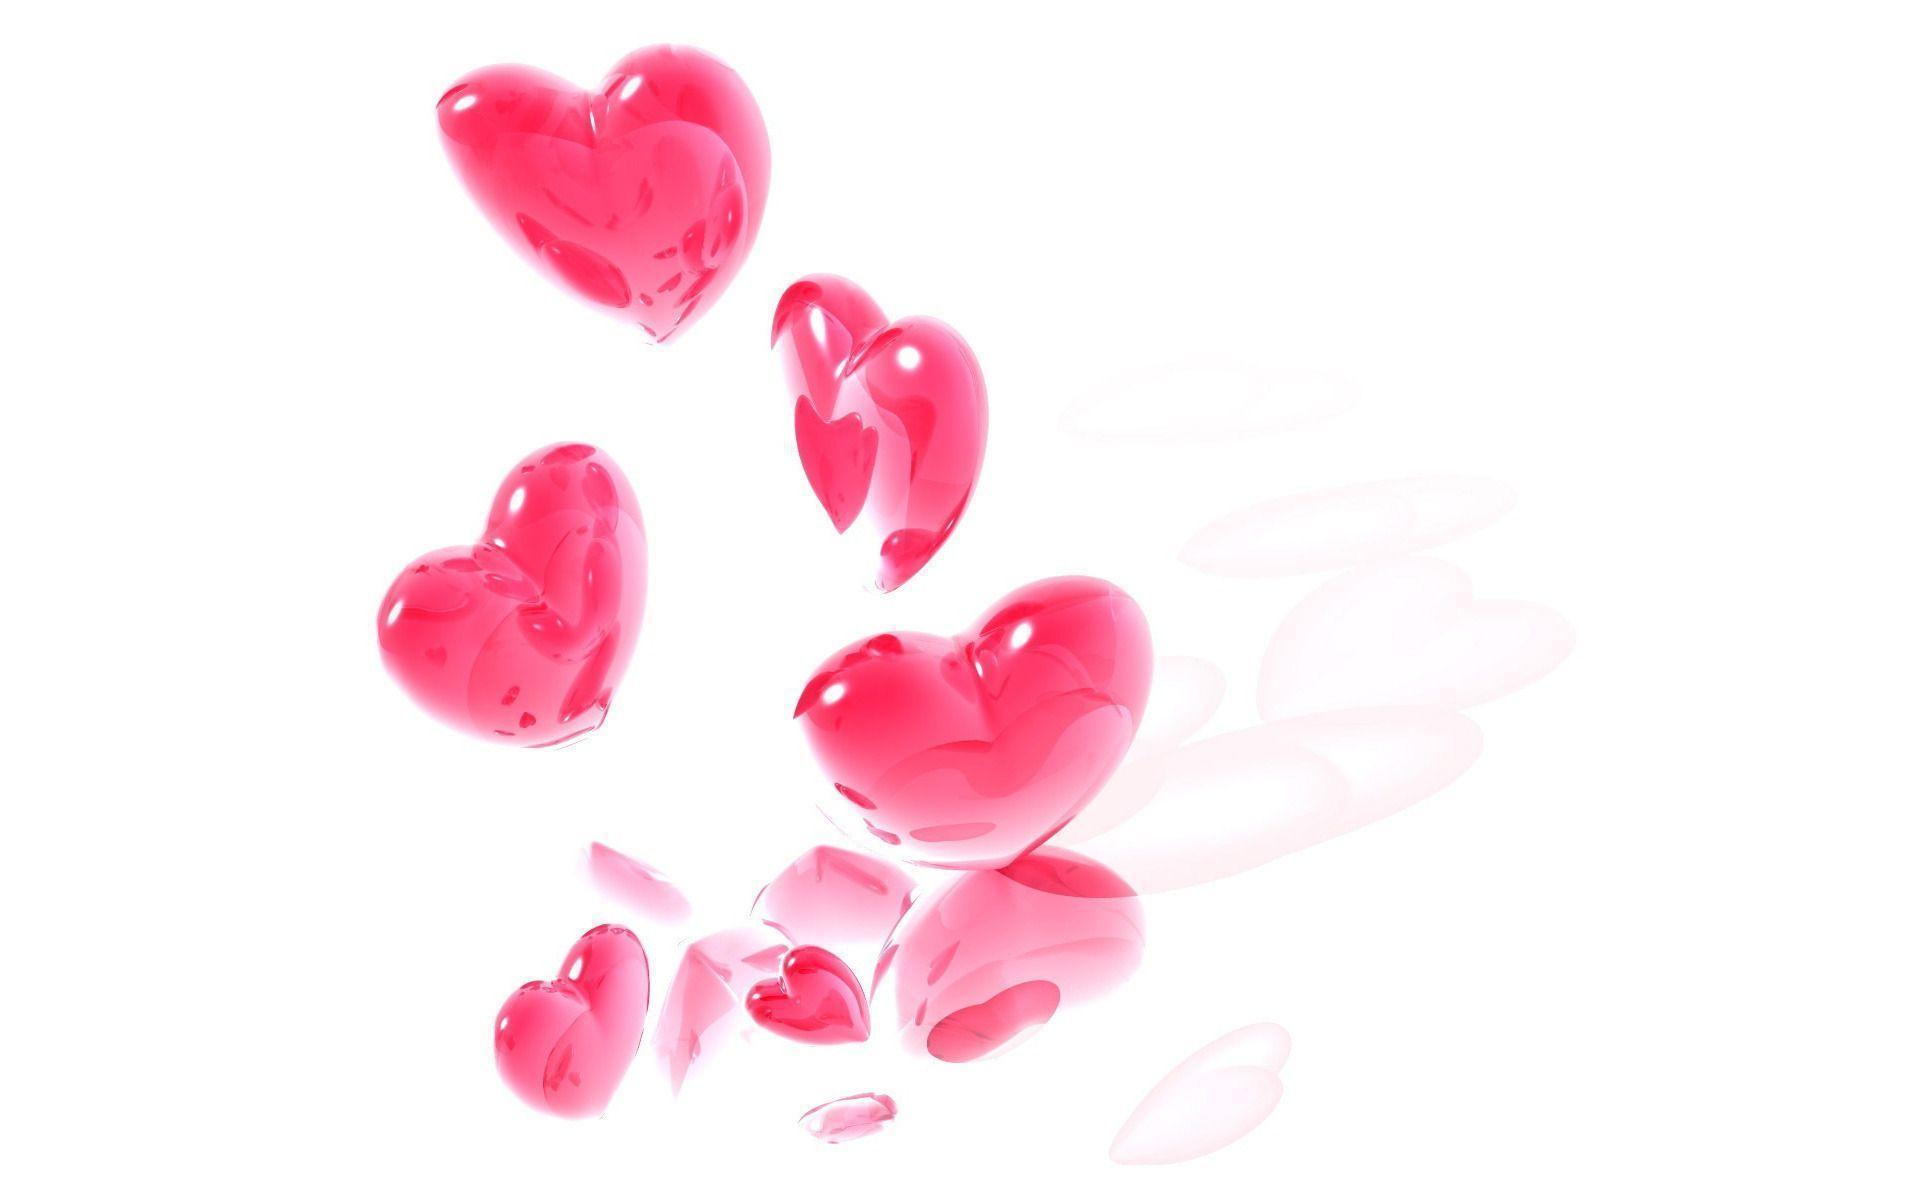 Pink Hearts Flying widescreen wallpaper. Wide